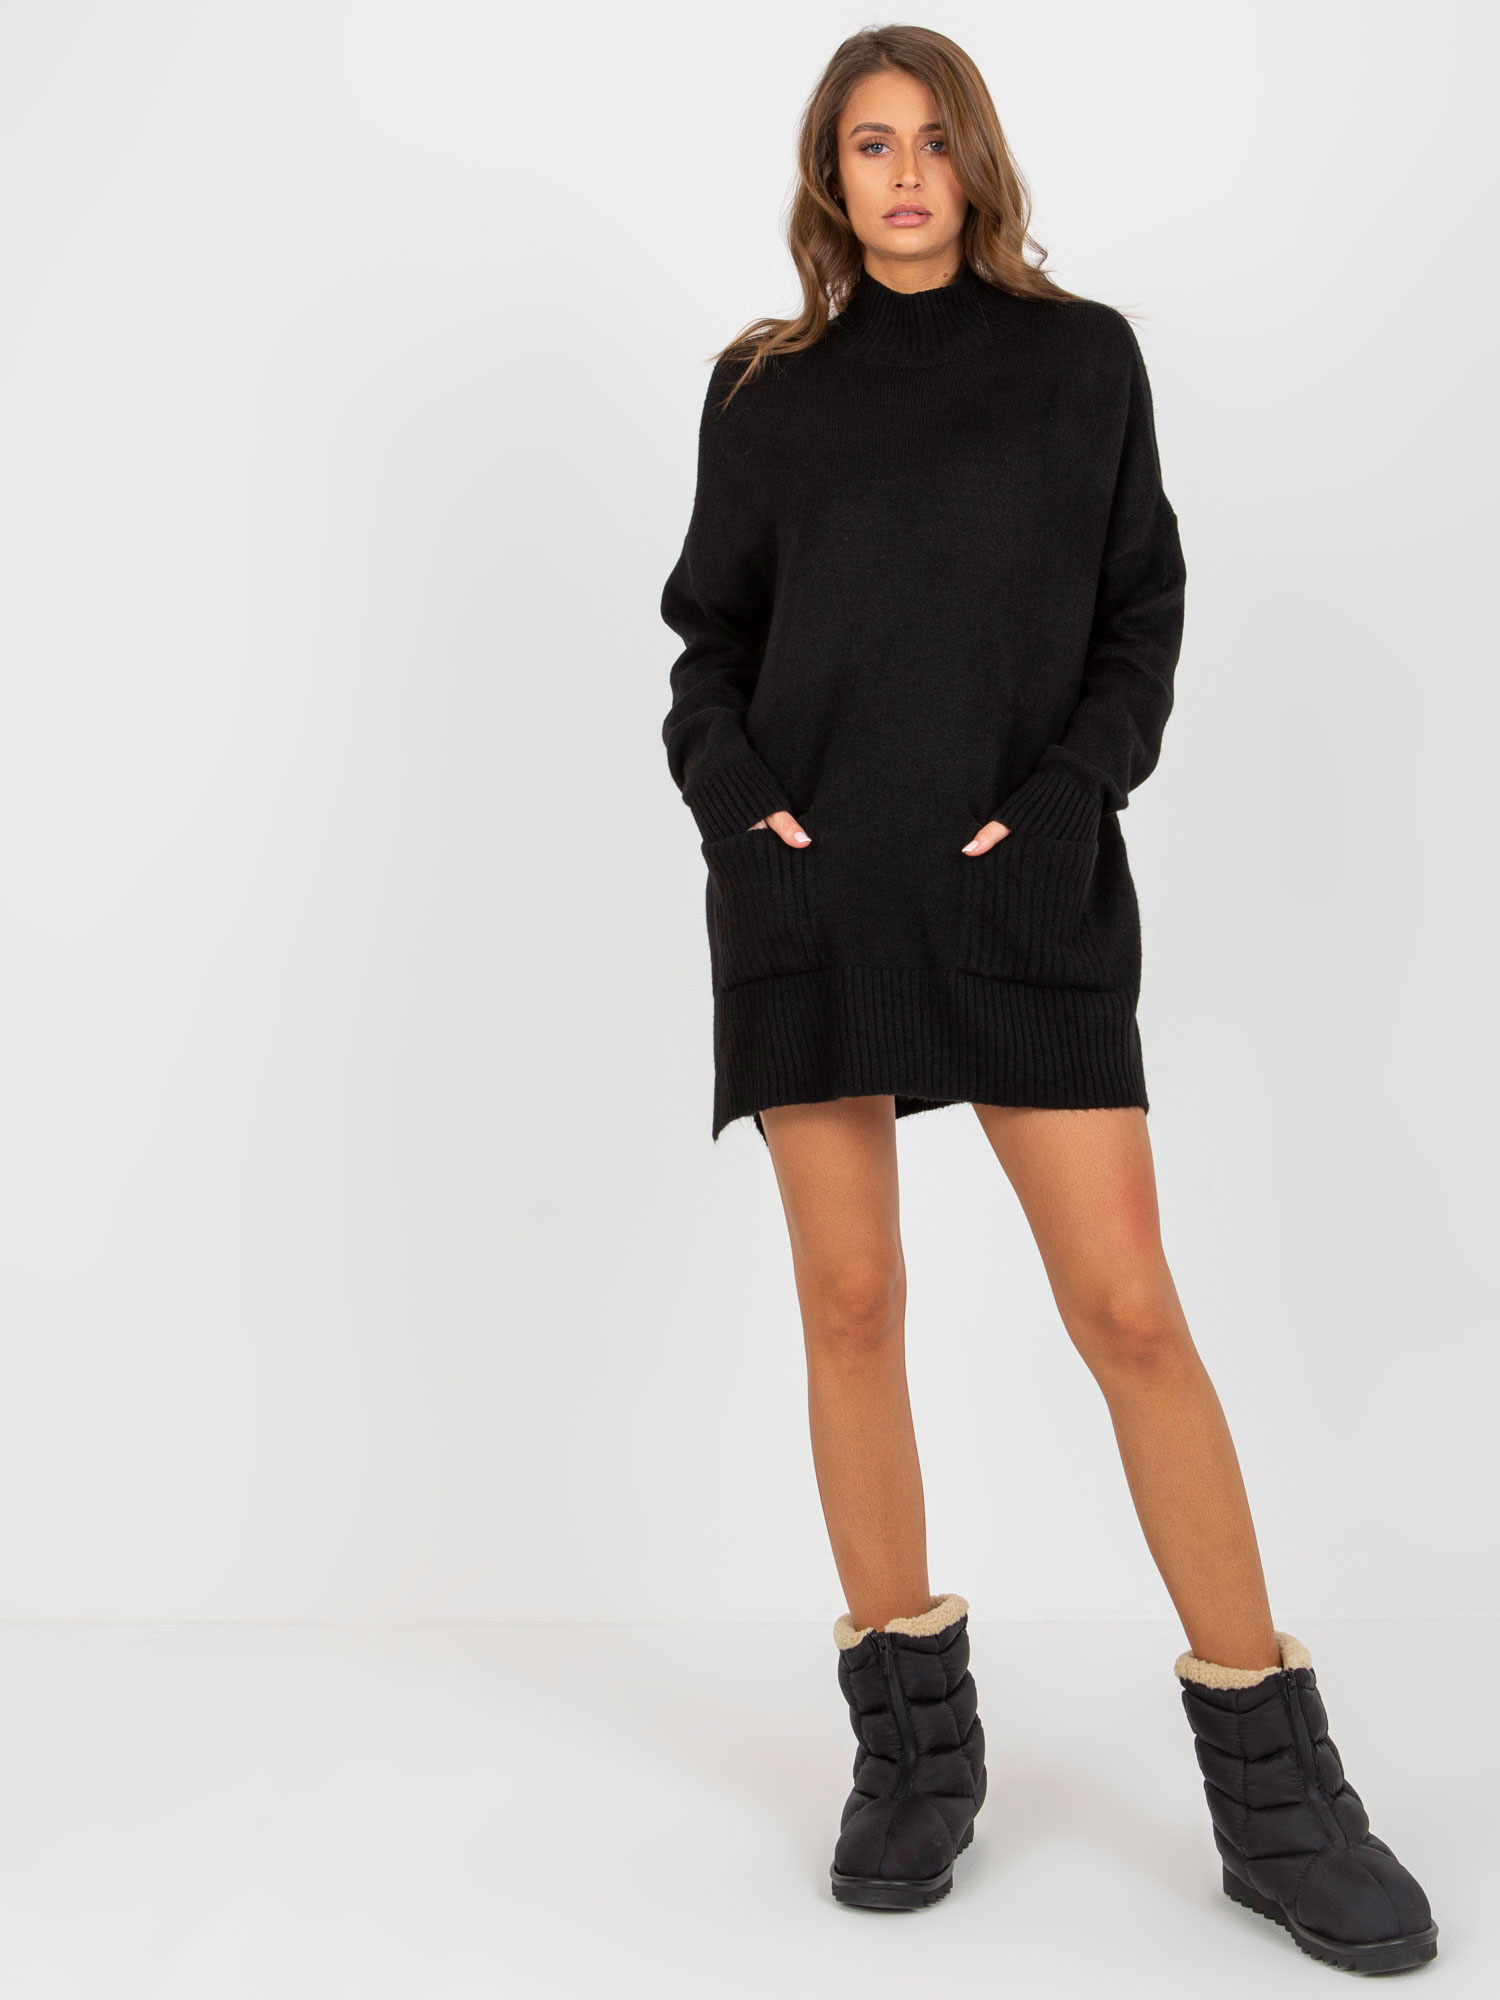 Lady's Black Oversized Sweater With Turtleneck